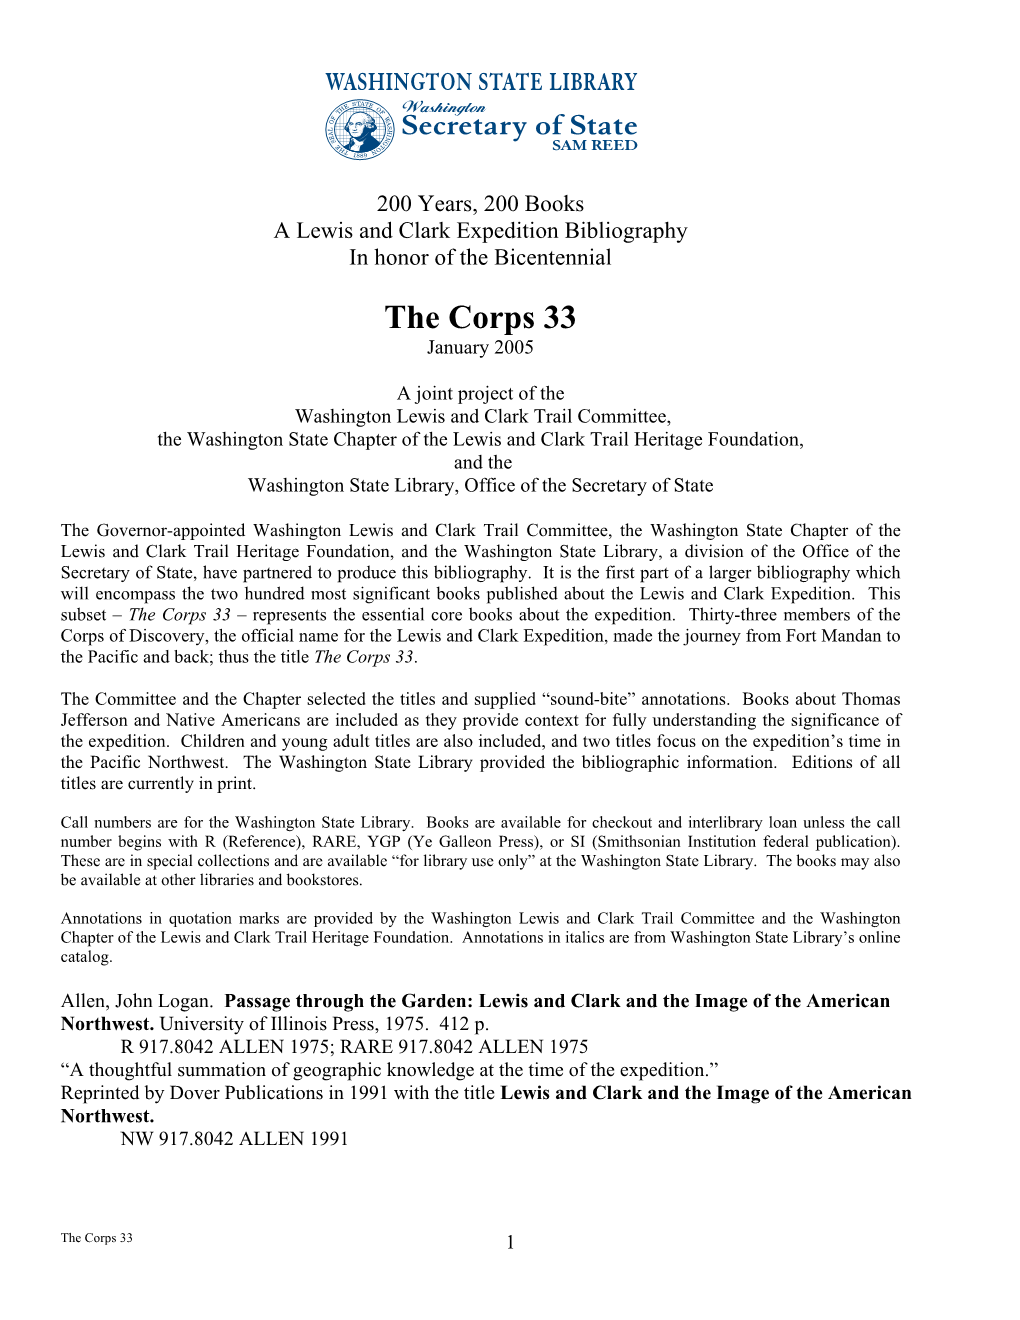 The Corps 33 January 2005